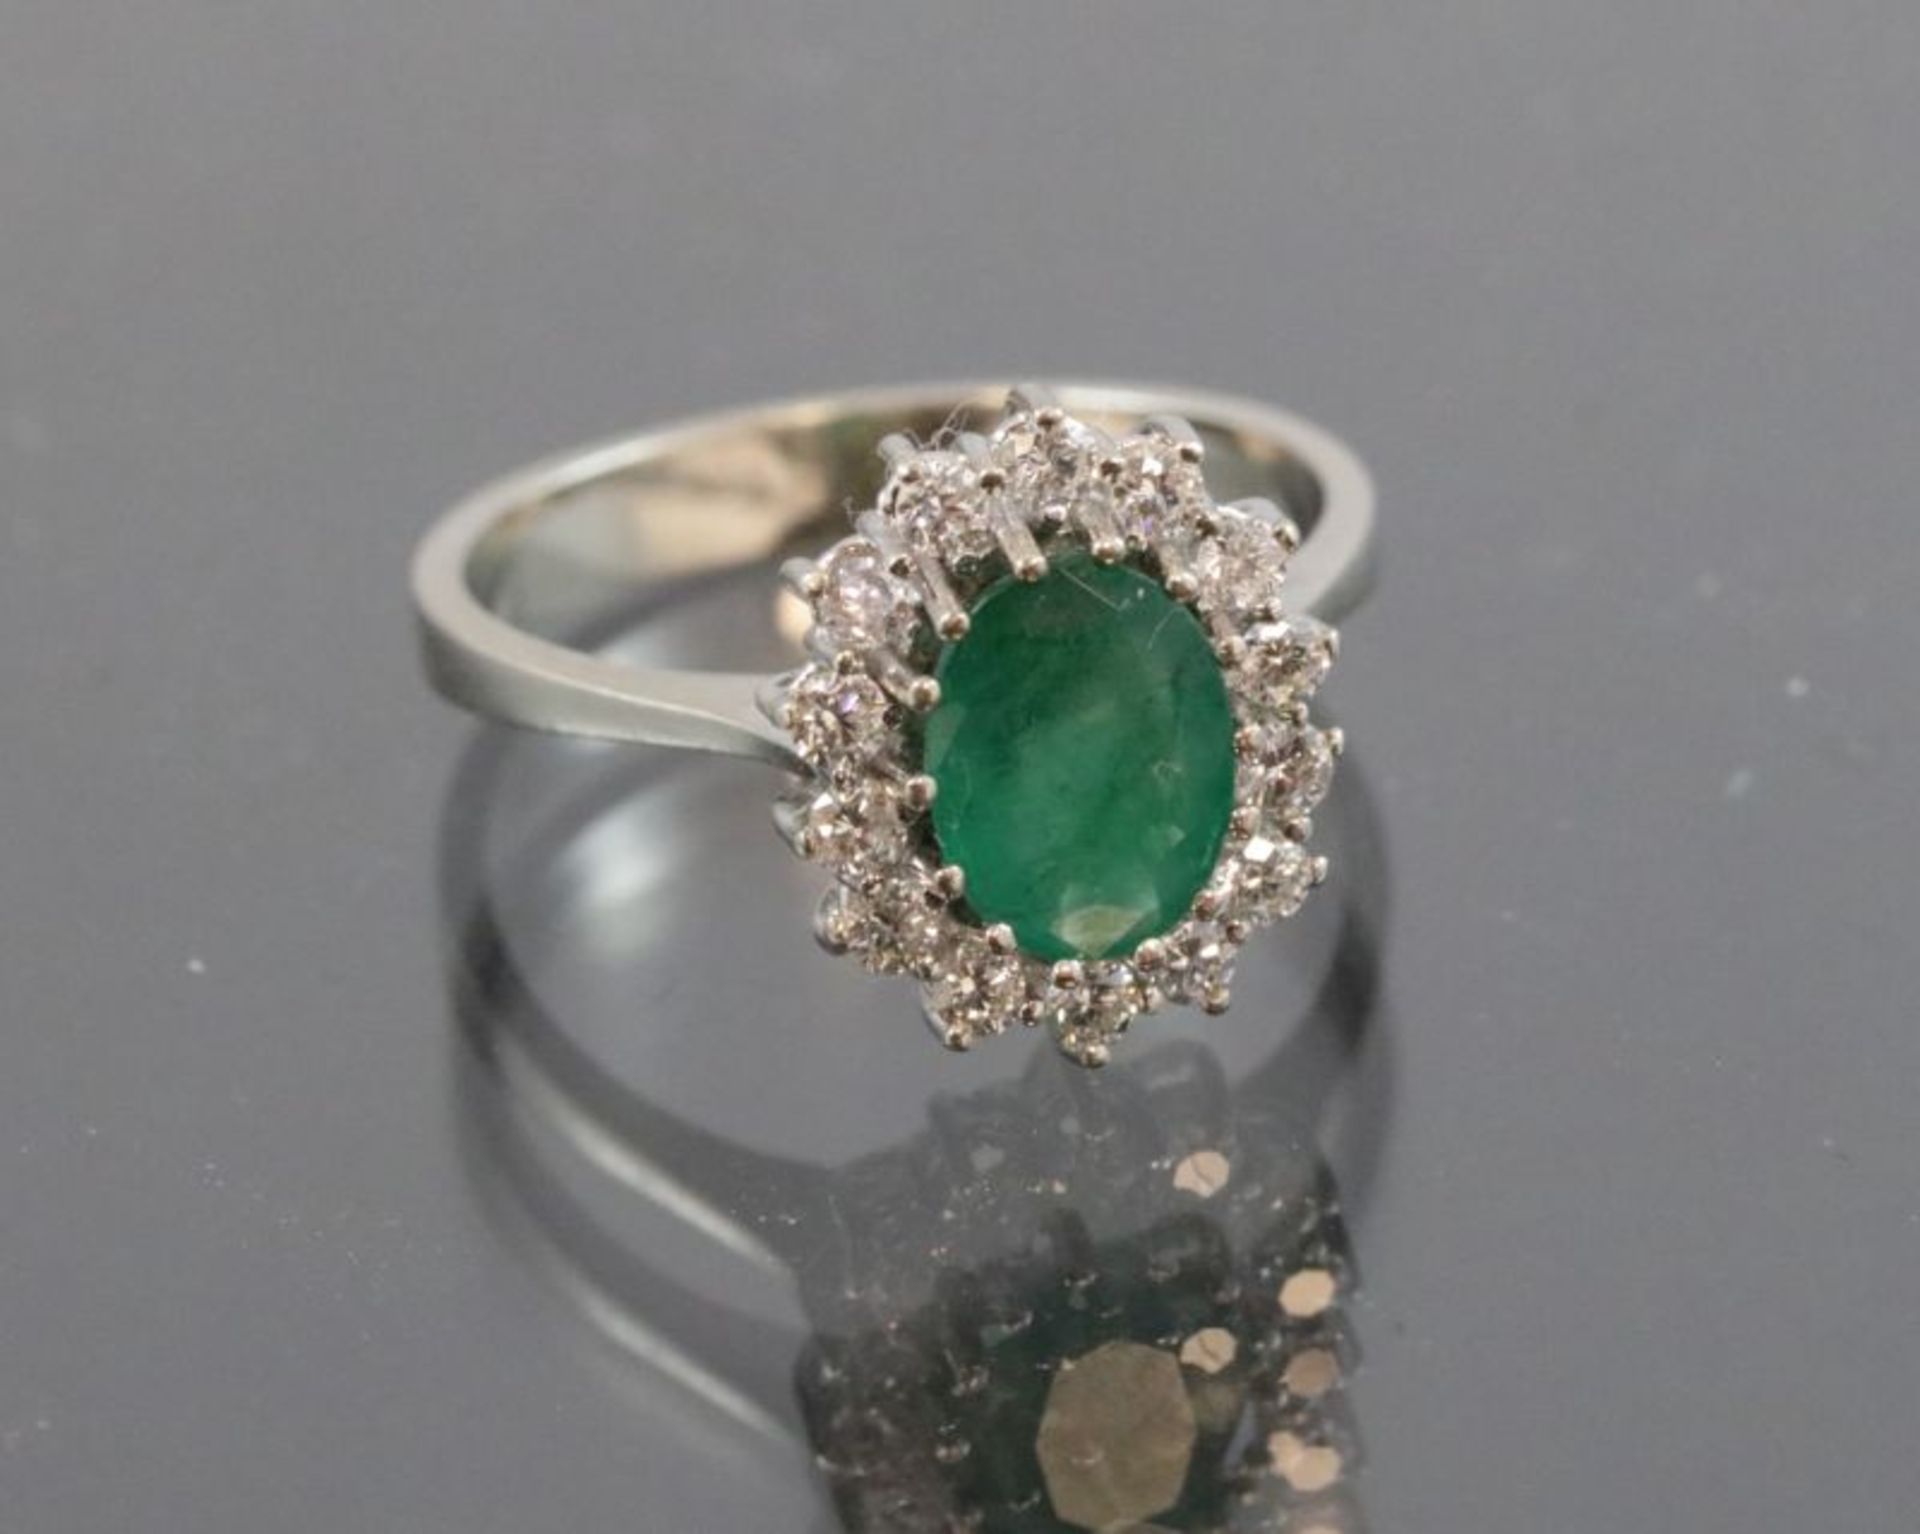 Smaragd-Brillant-Ring, 585 Weißgold3,5 Gramm 14 Brillanten, 0,36 ct., Ringgröße: 53Smaragd ca. 1